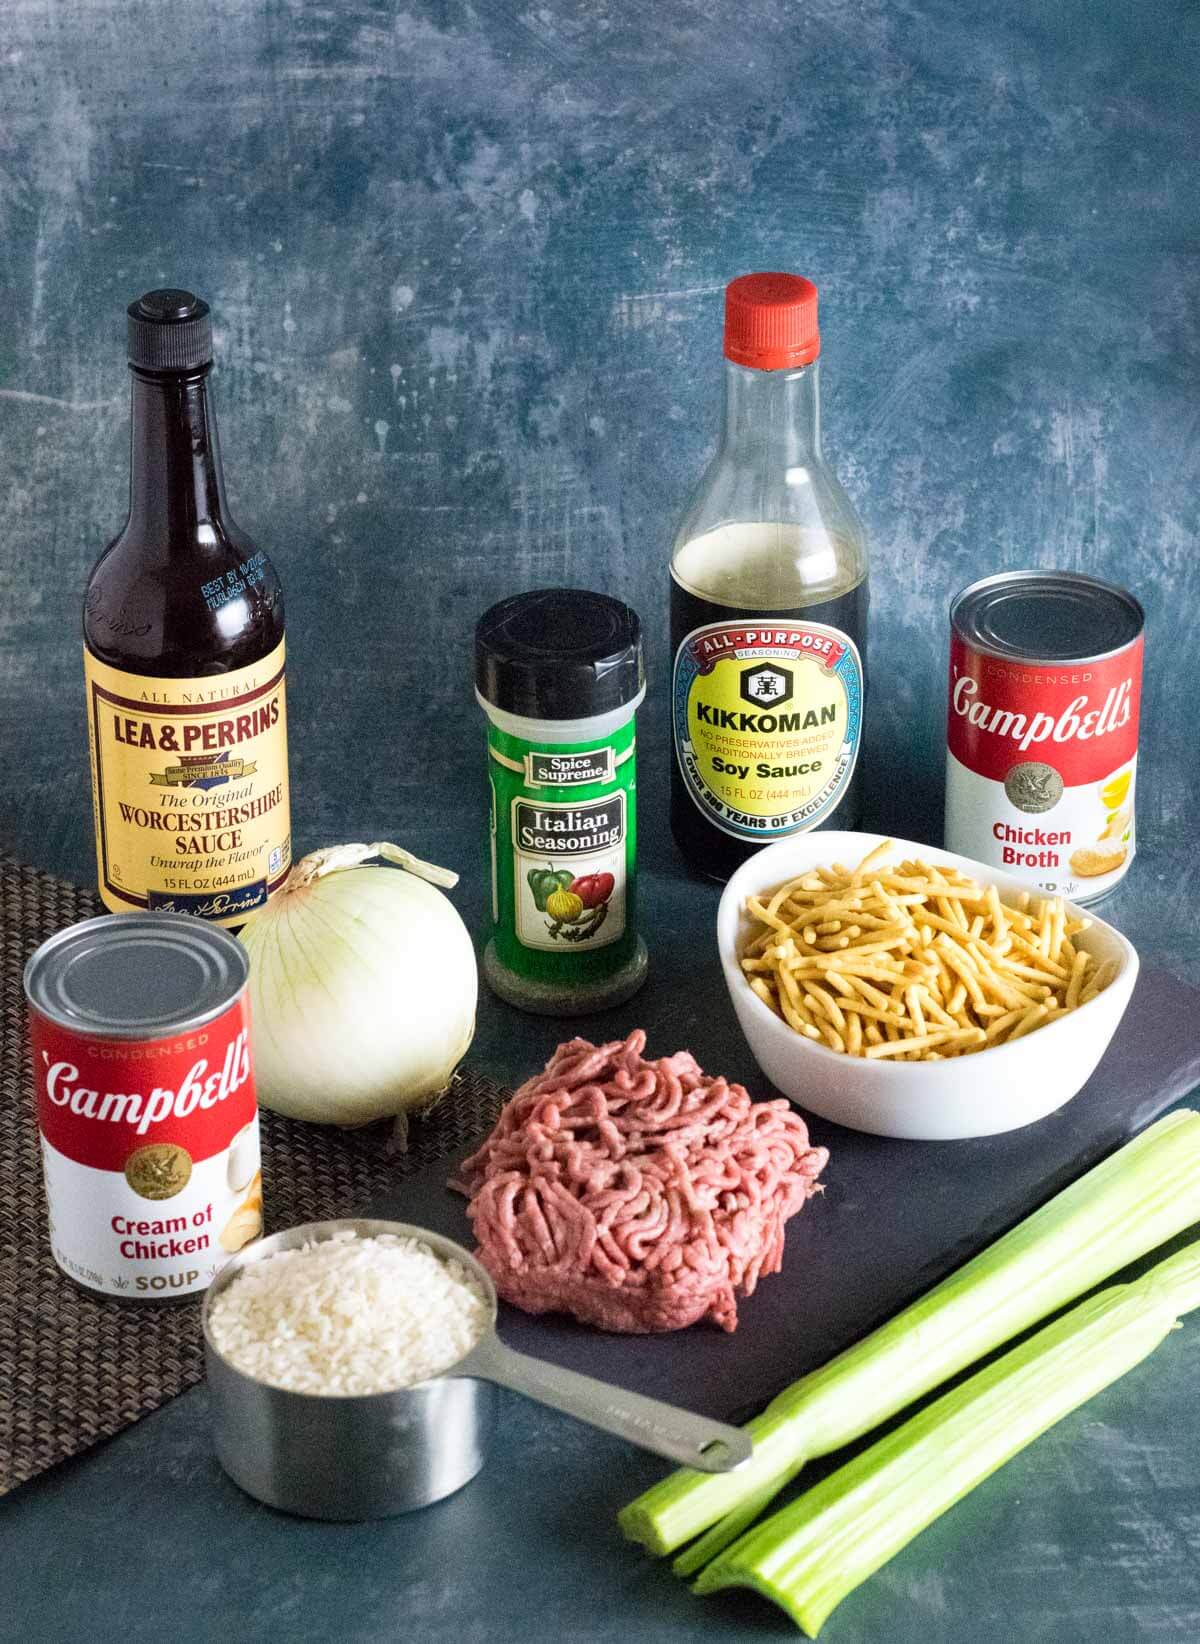 Showing ingredients for Hamburger rice hotdish recipe.